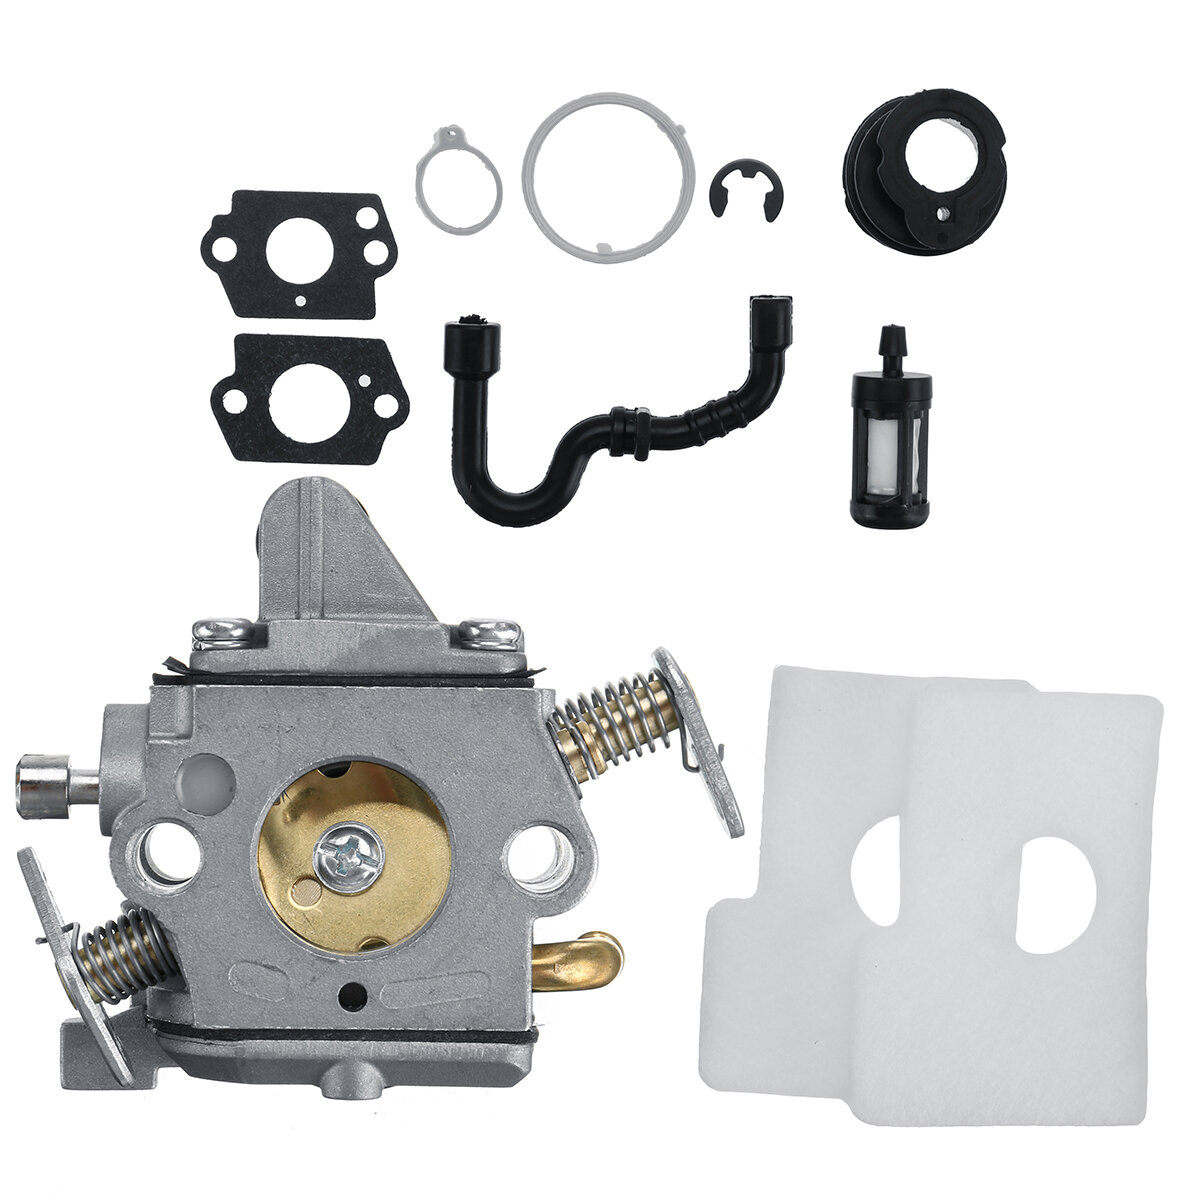 Carburateur Intake Carb Kit Voor STIHL Kettingzaag 017018 MS170 MS180 # 11301200603